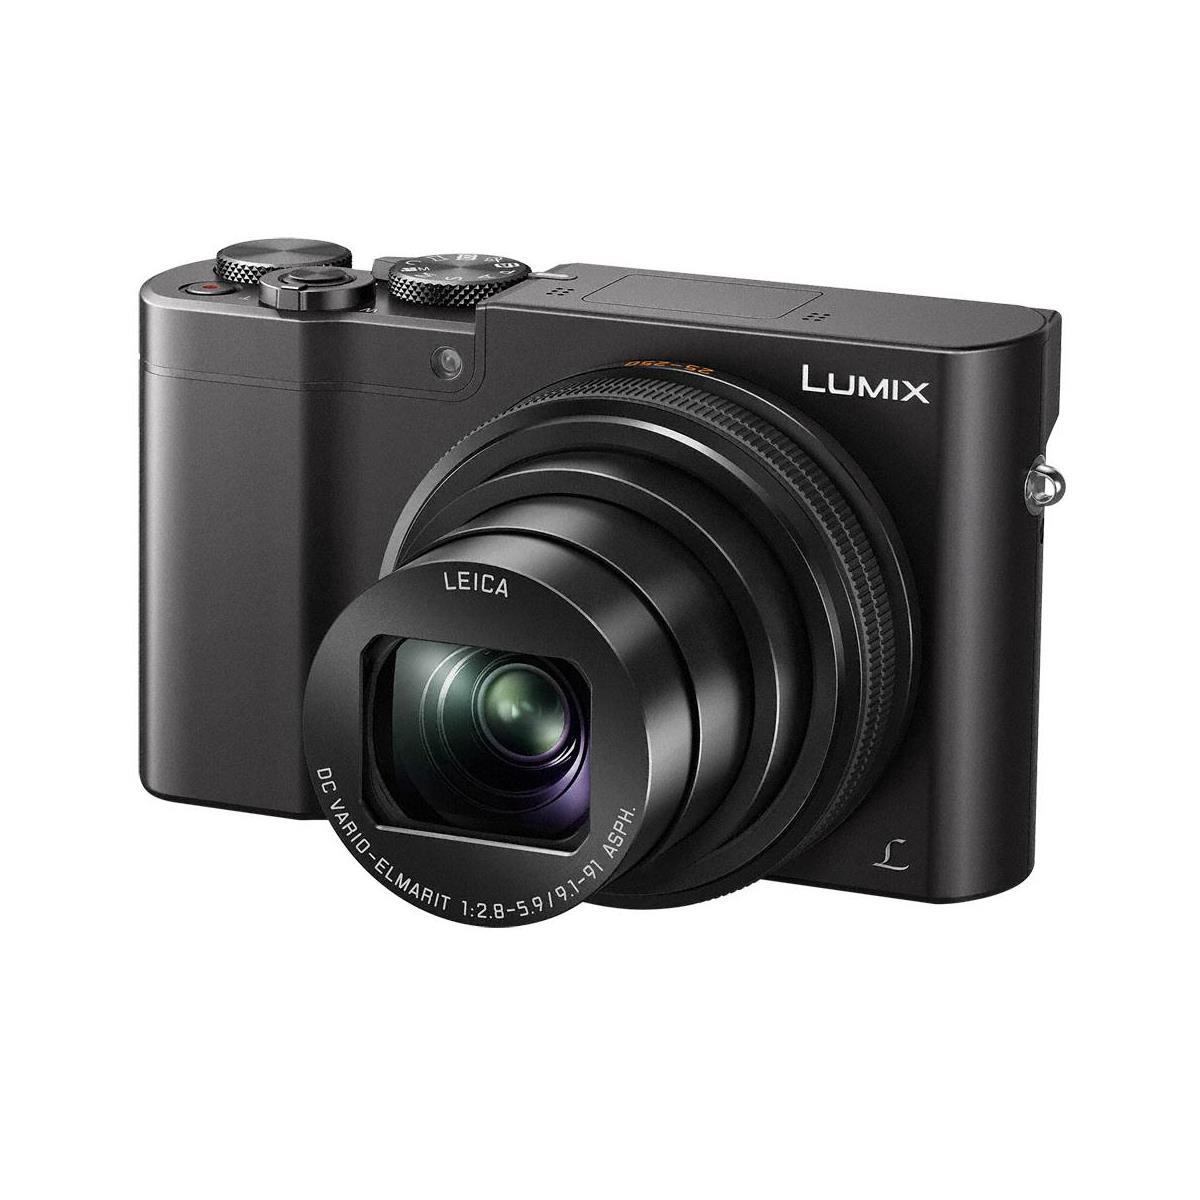 Panasonic Lumix DMC-ZS100 Digital Camera, Black